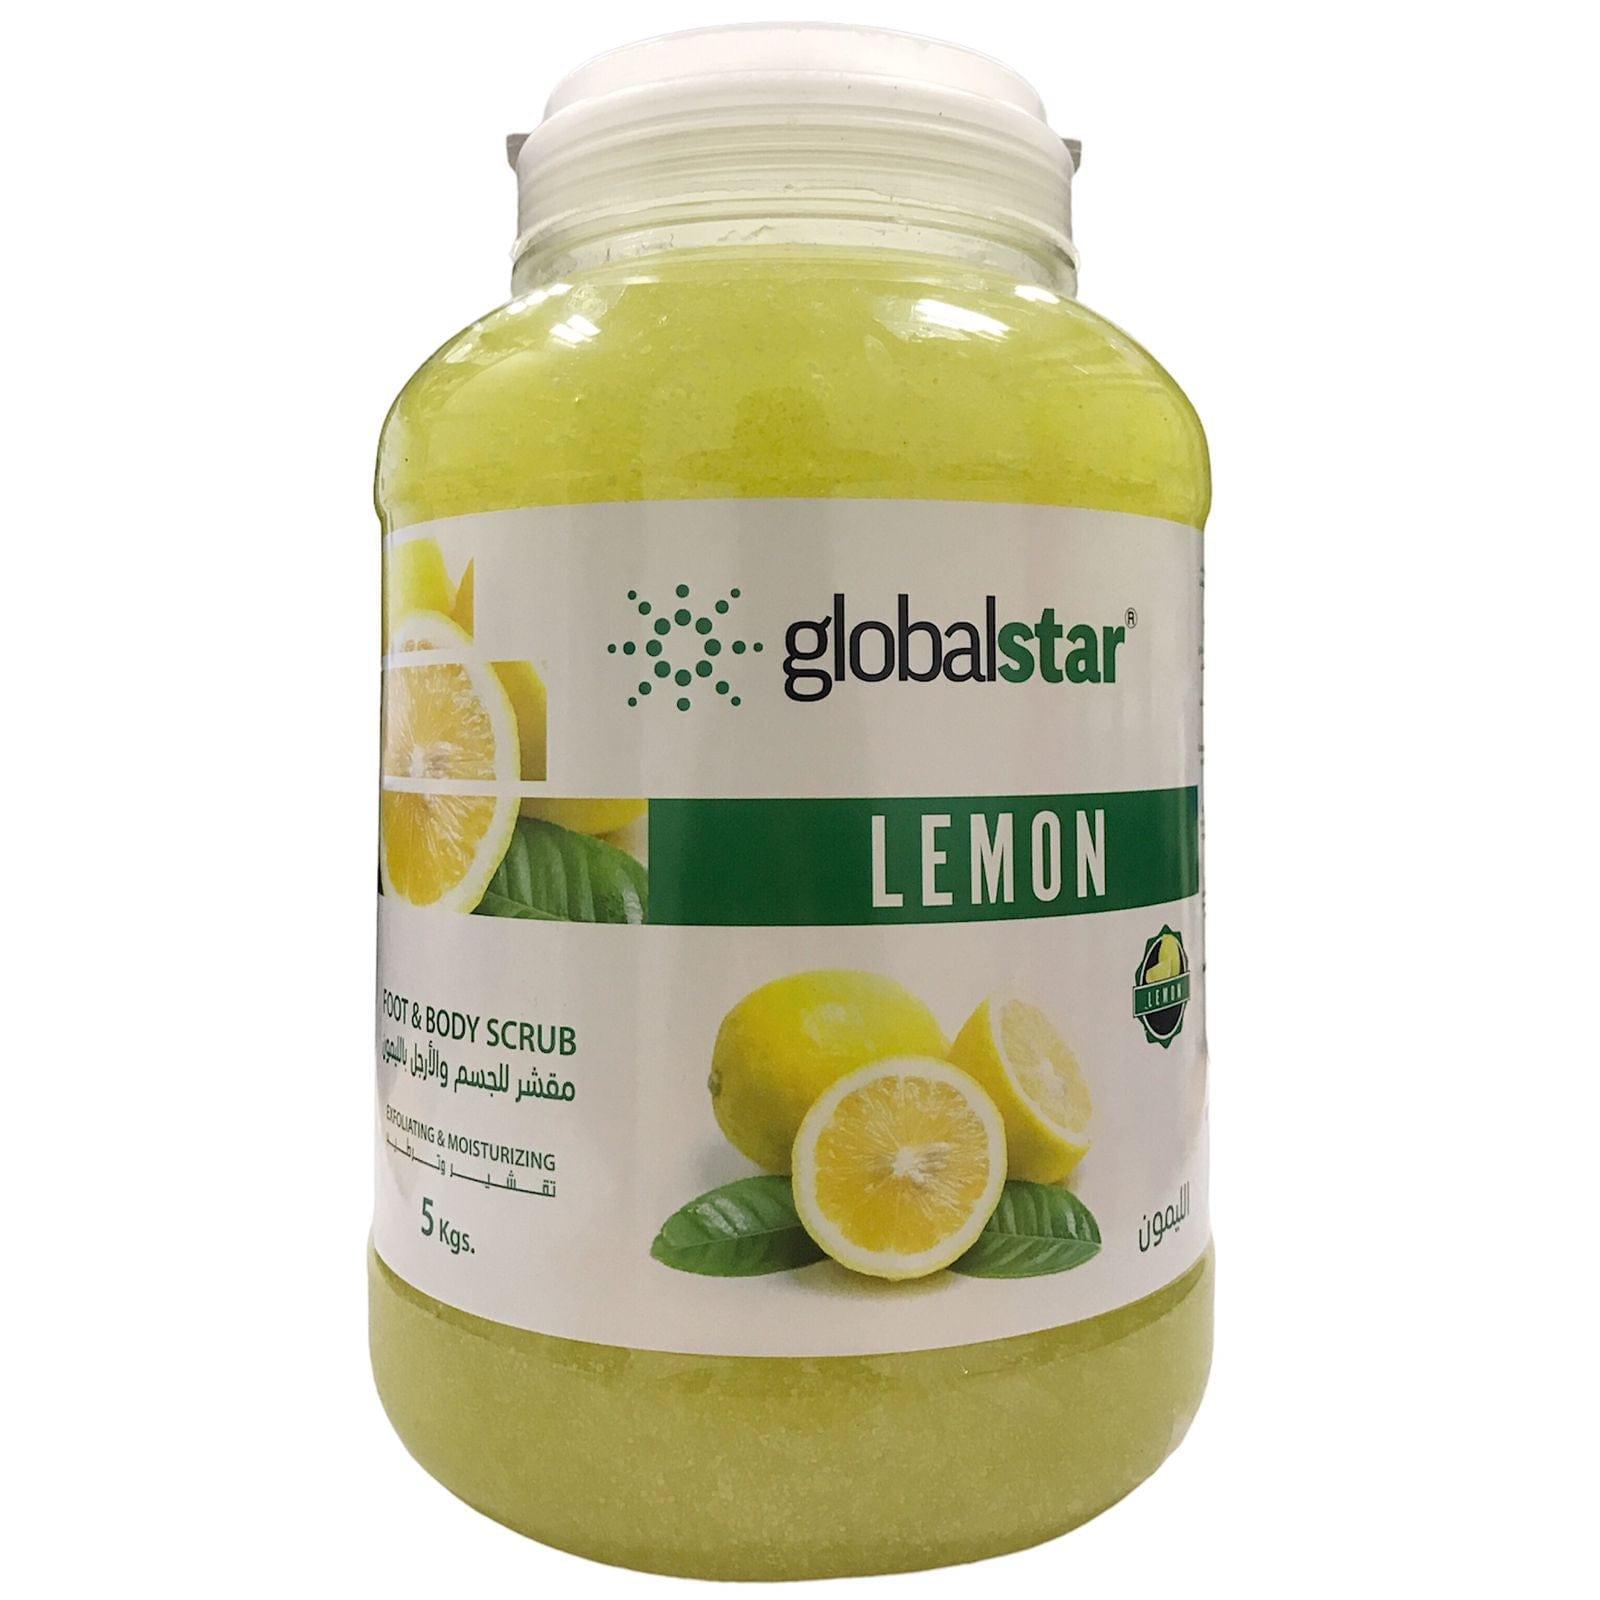 GlobalStar Exfoliating Foot And Body Scrub Lemon 5kg